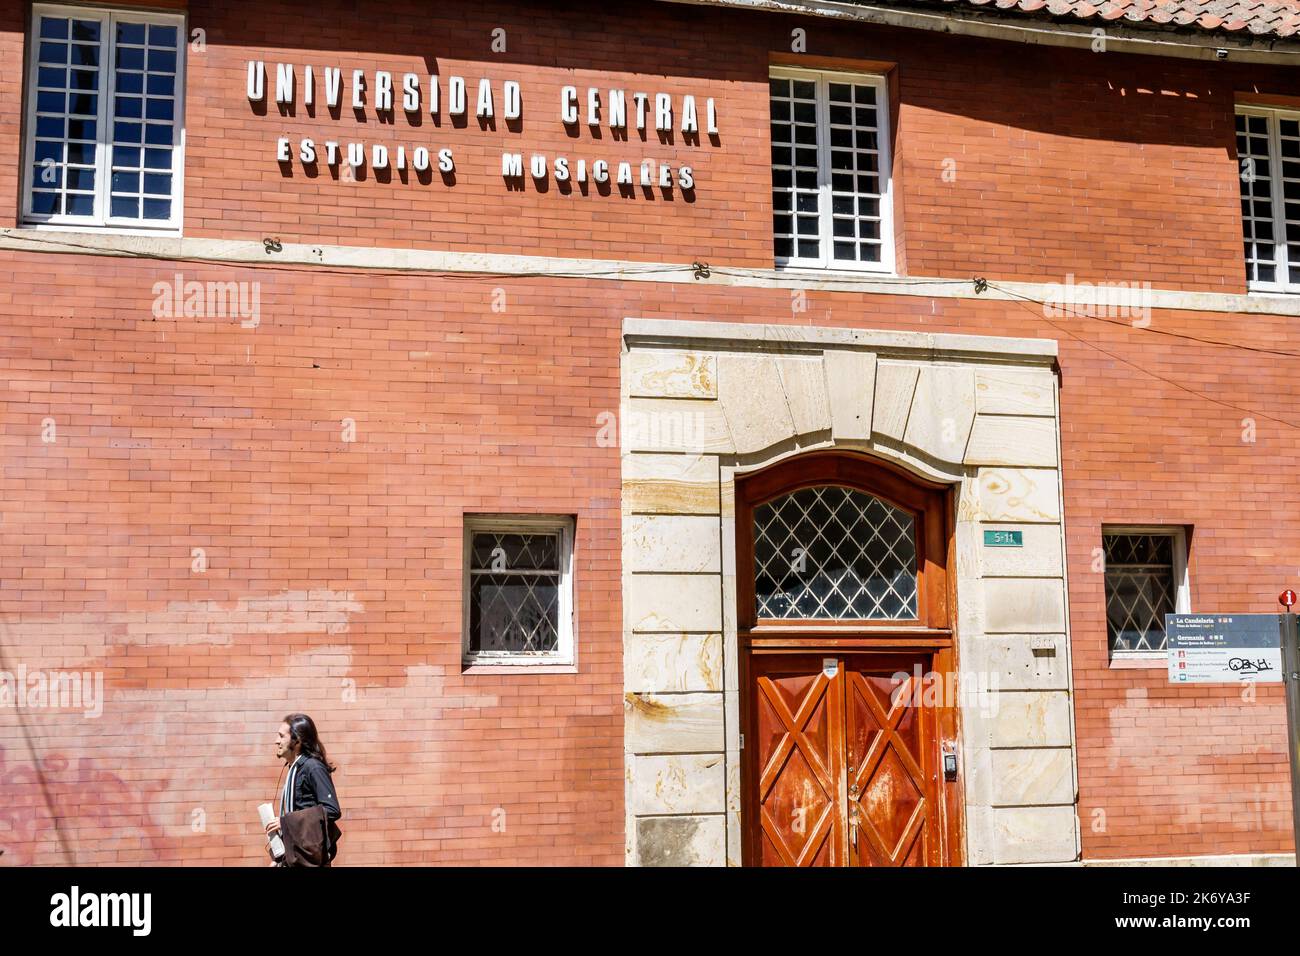 Bogota Colombia, Santa Fe Universidad Central Estudios Musicales Central University Musical Studies, uomo uomo maschio, esterno edificio ingresso anteriore Foto Stock